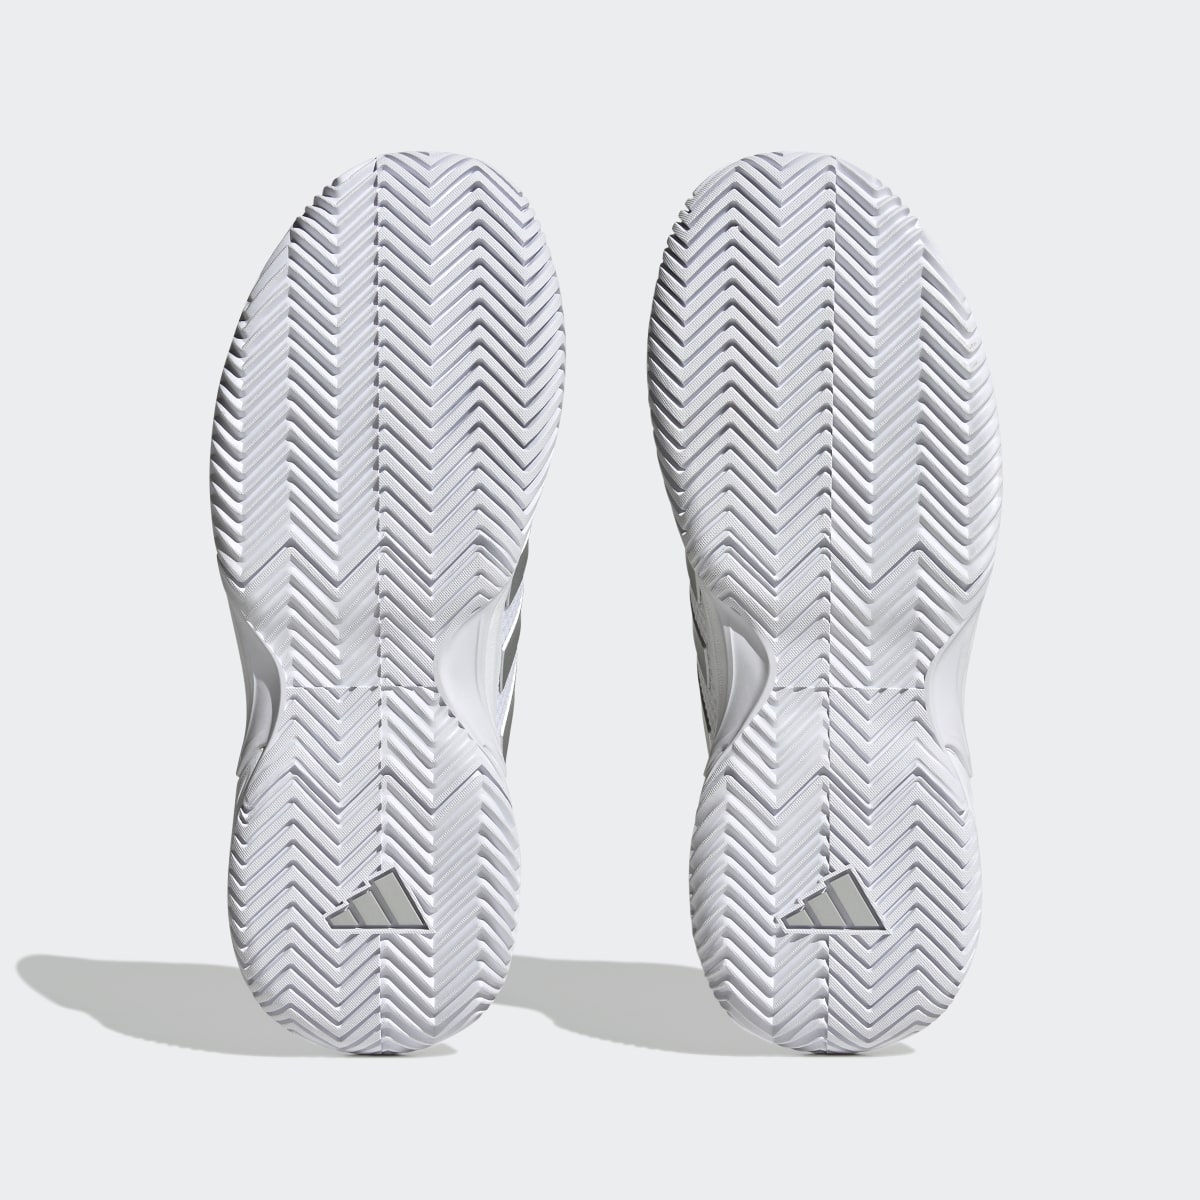 Adidas Gamecourt 2.0 Tenis Ayakkabısı. 4